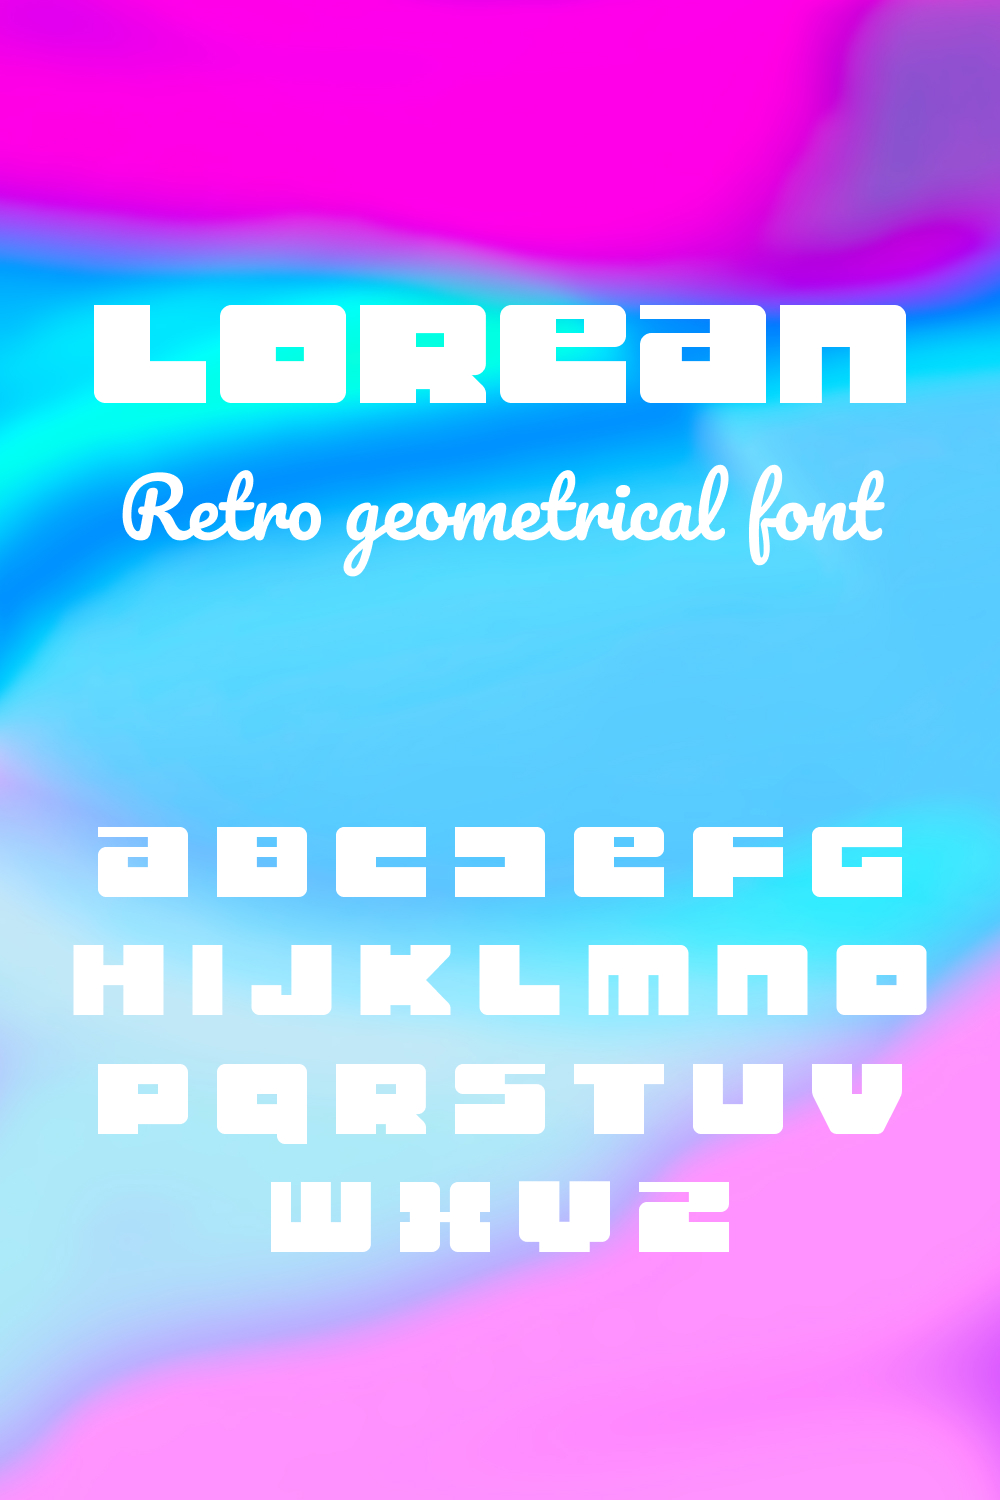 Lorean font of pinterest.